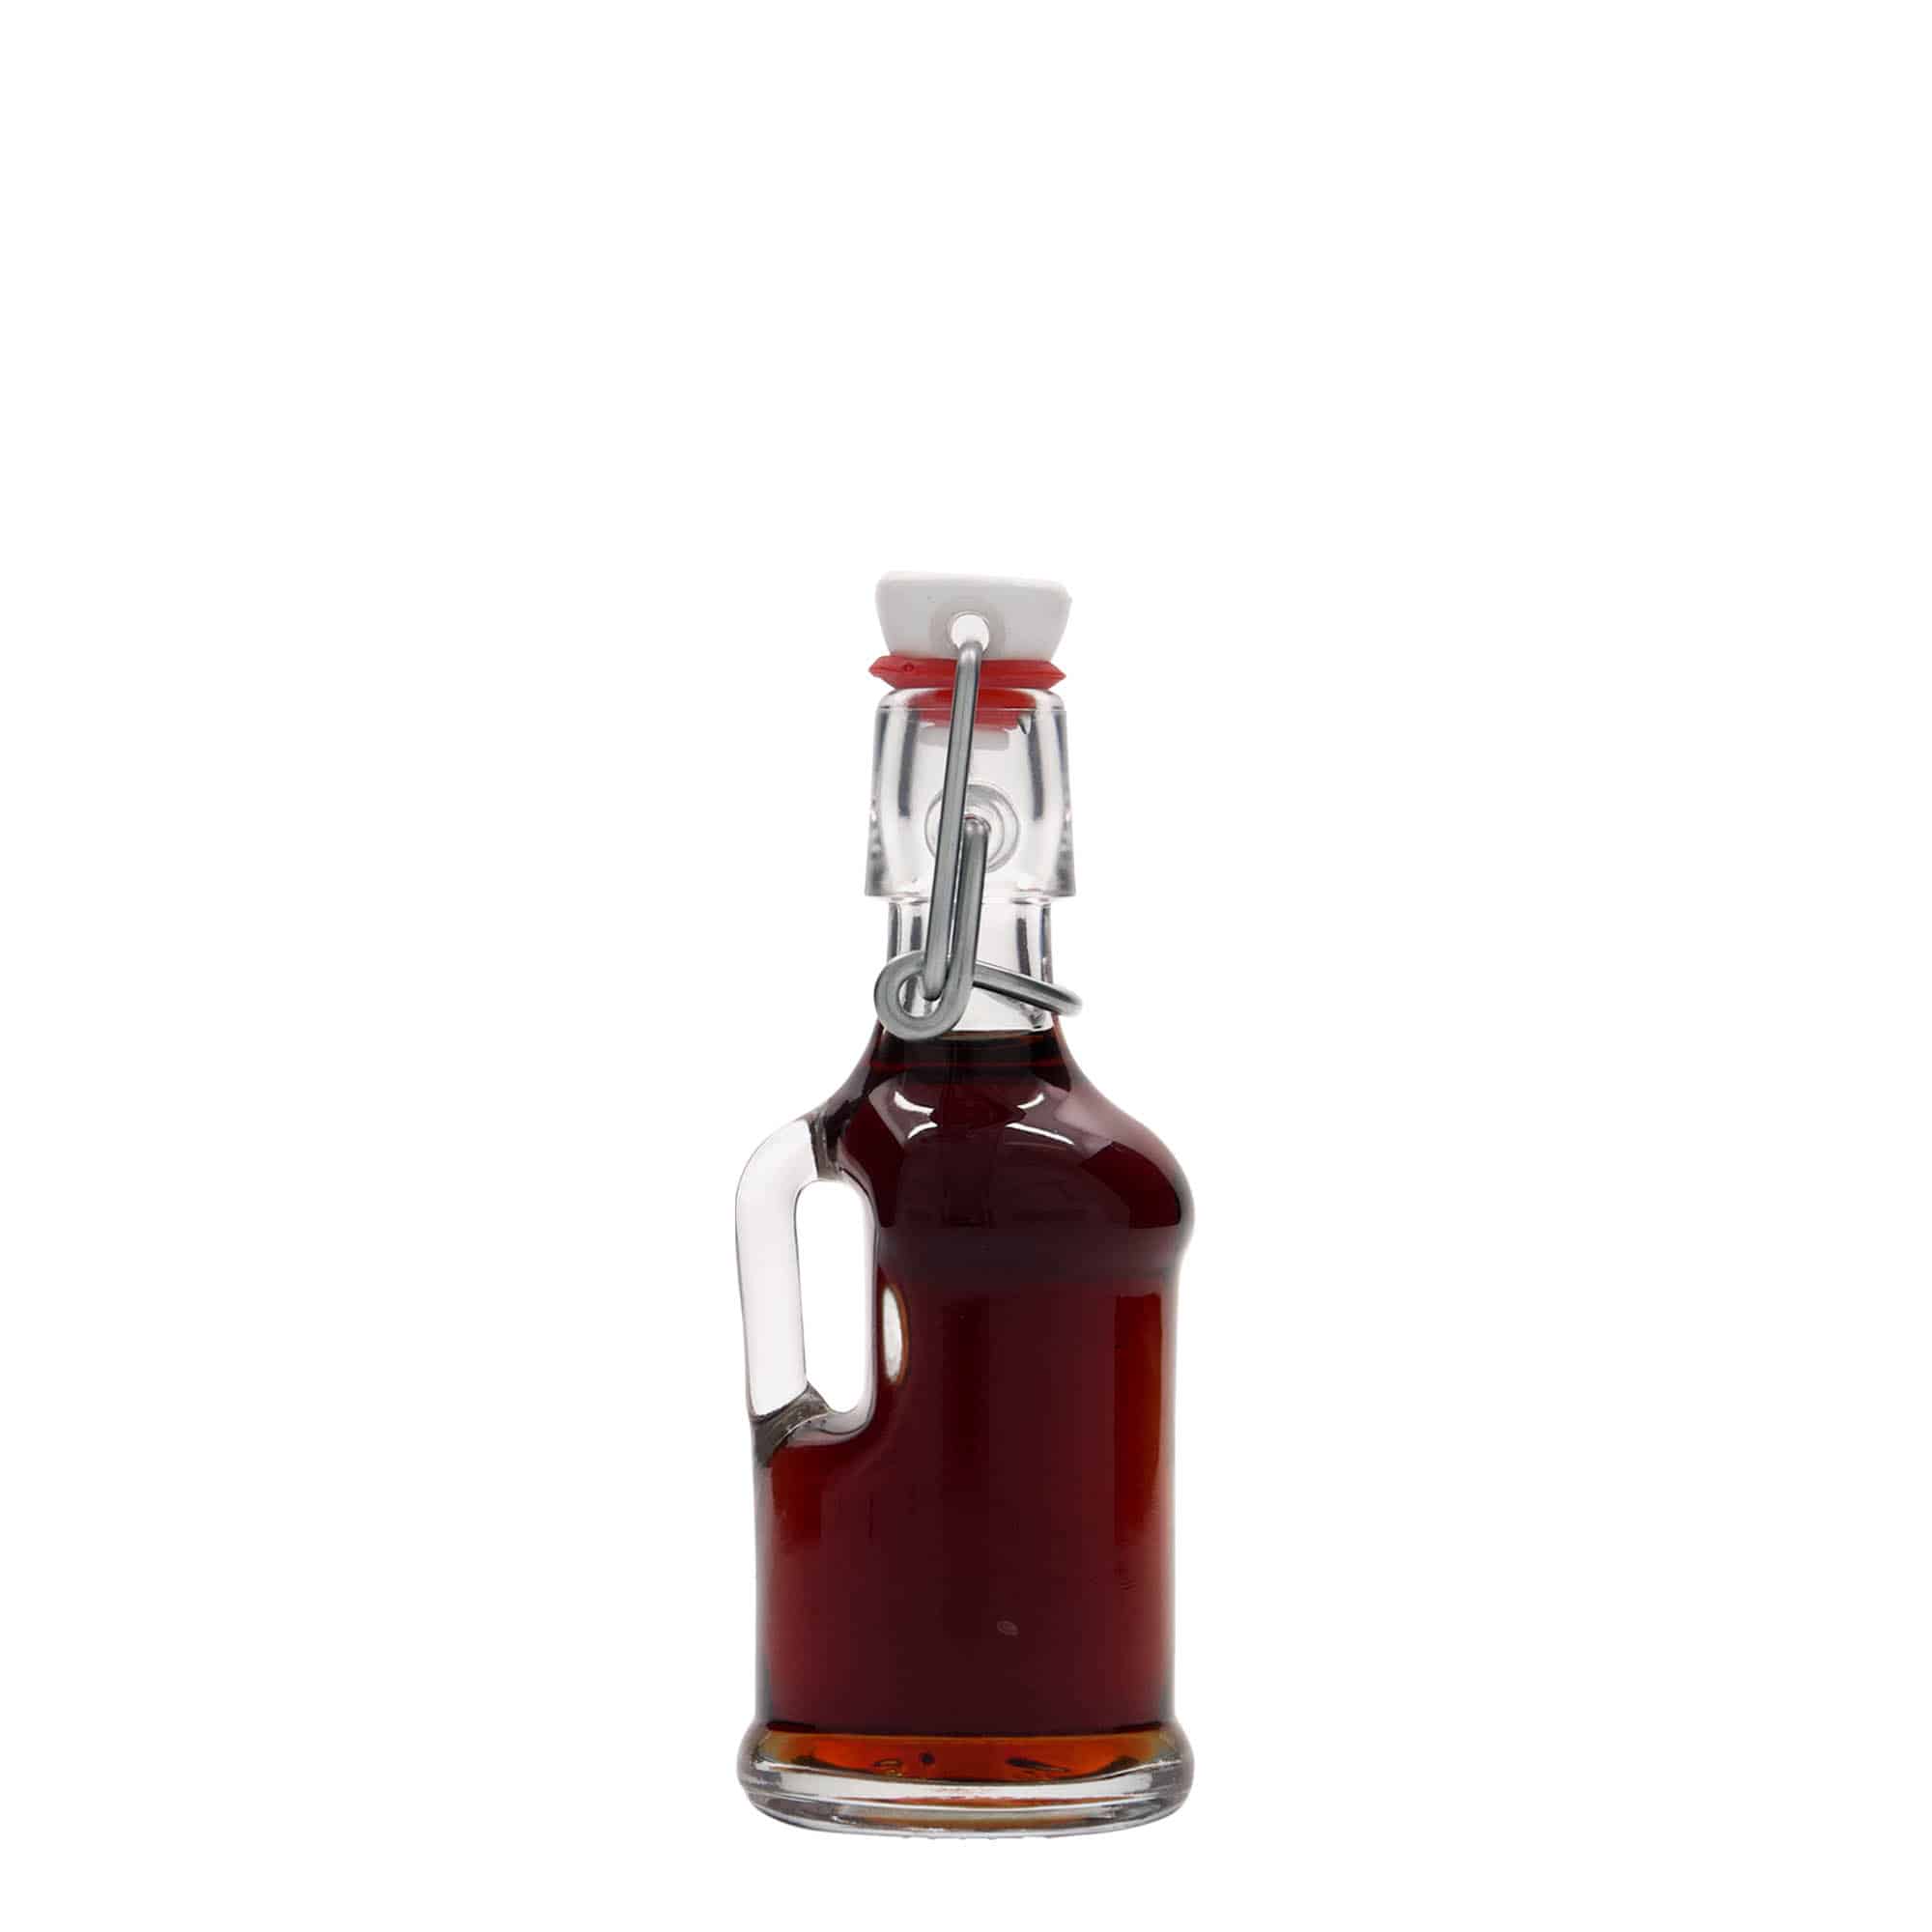 40 ml glass bottle 'Classica', closure: swing top